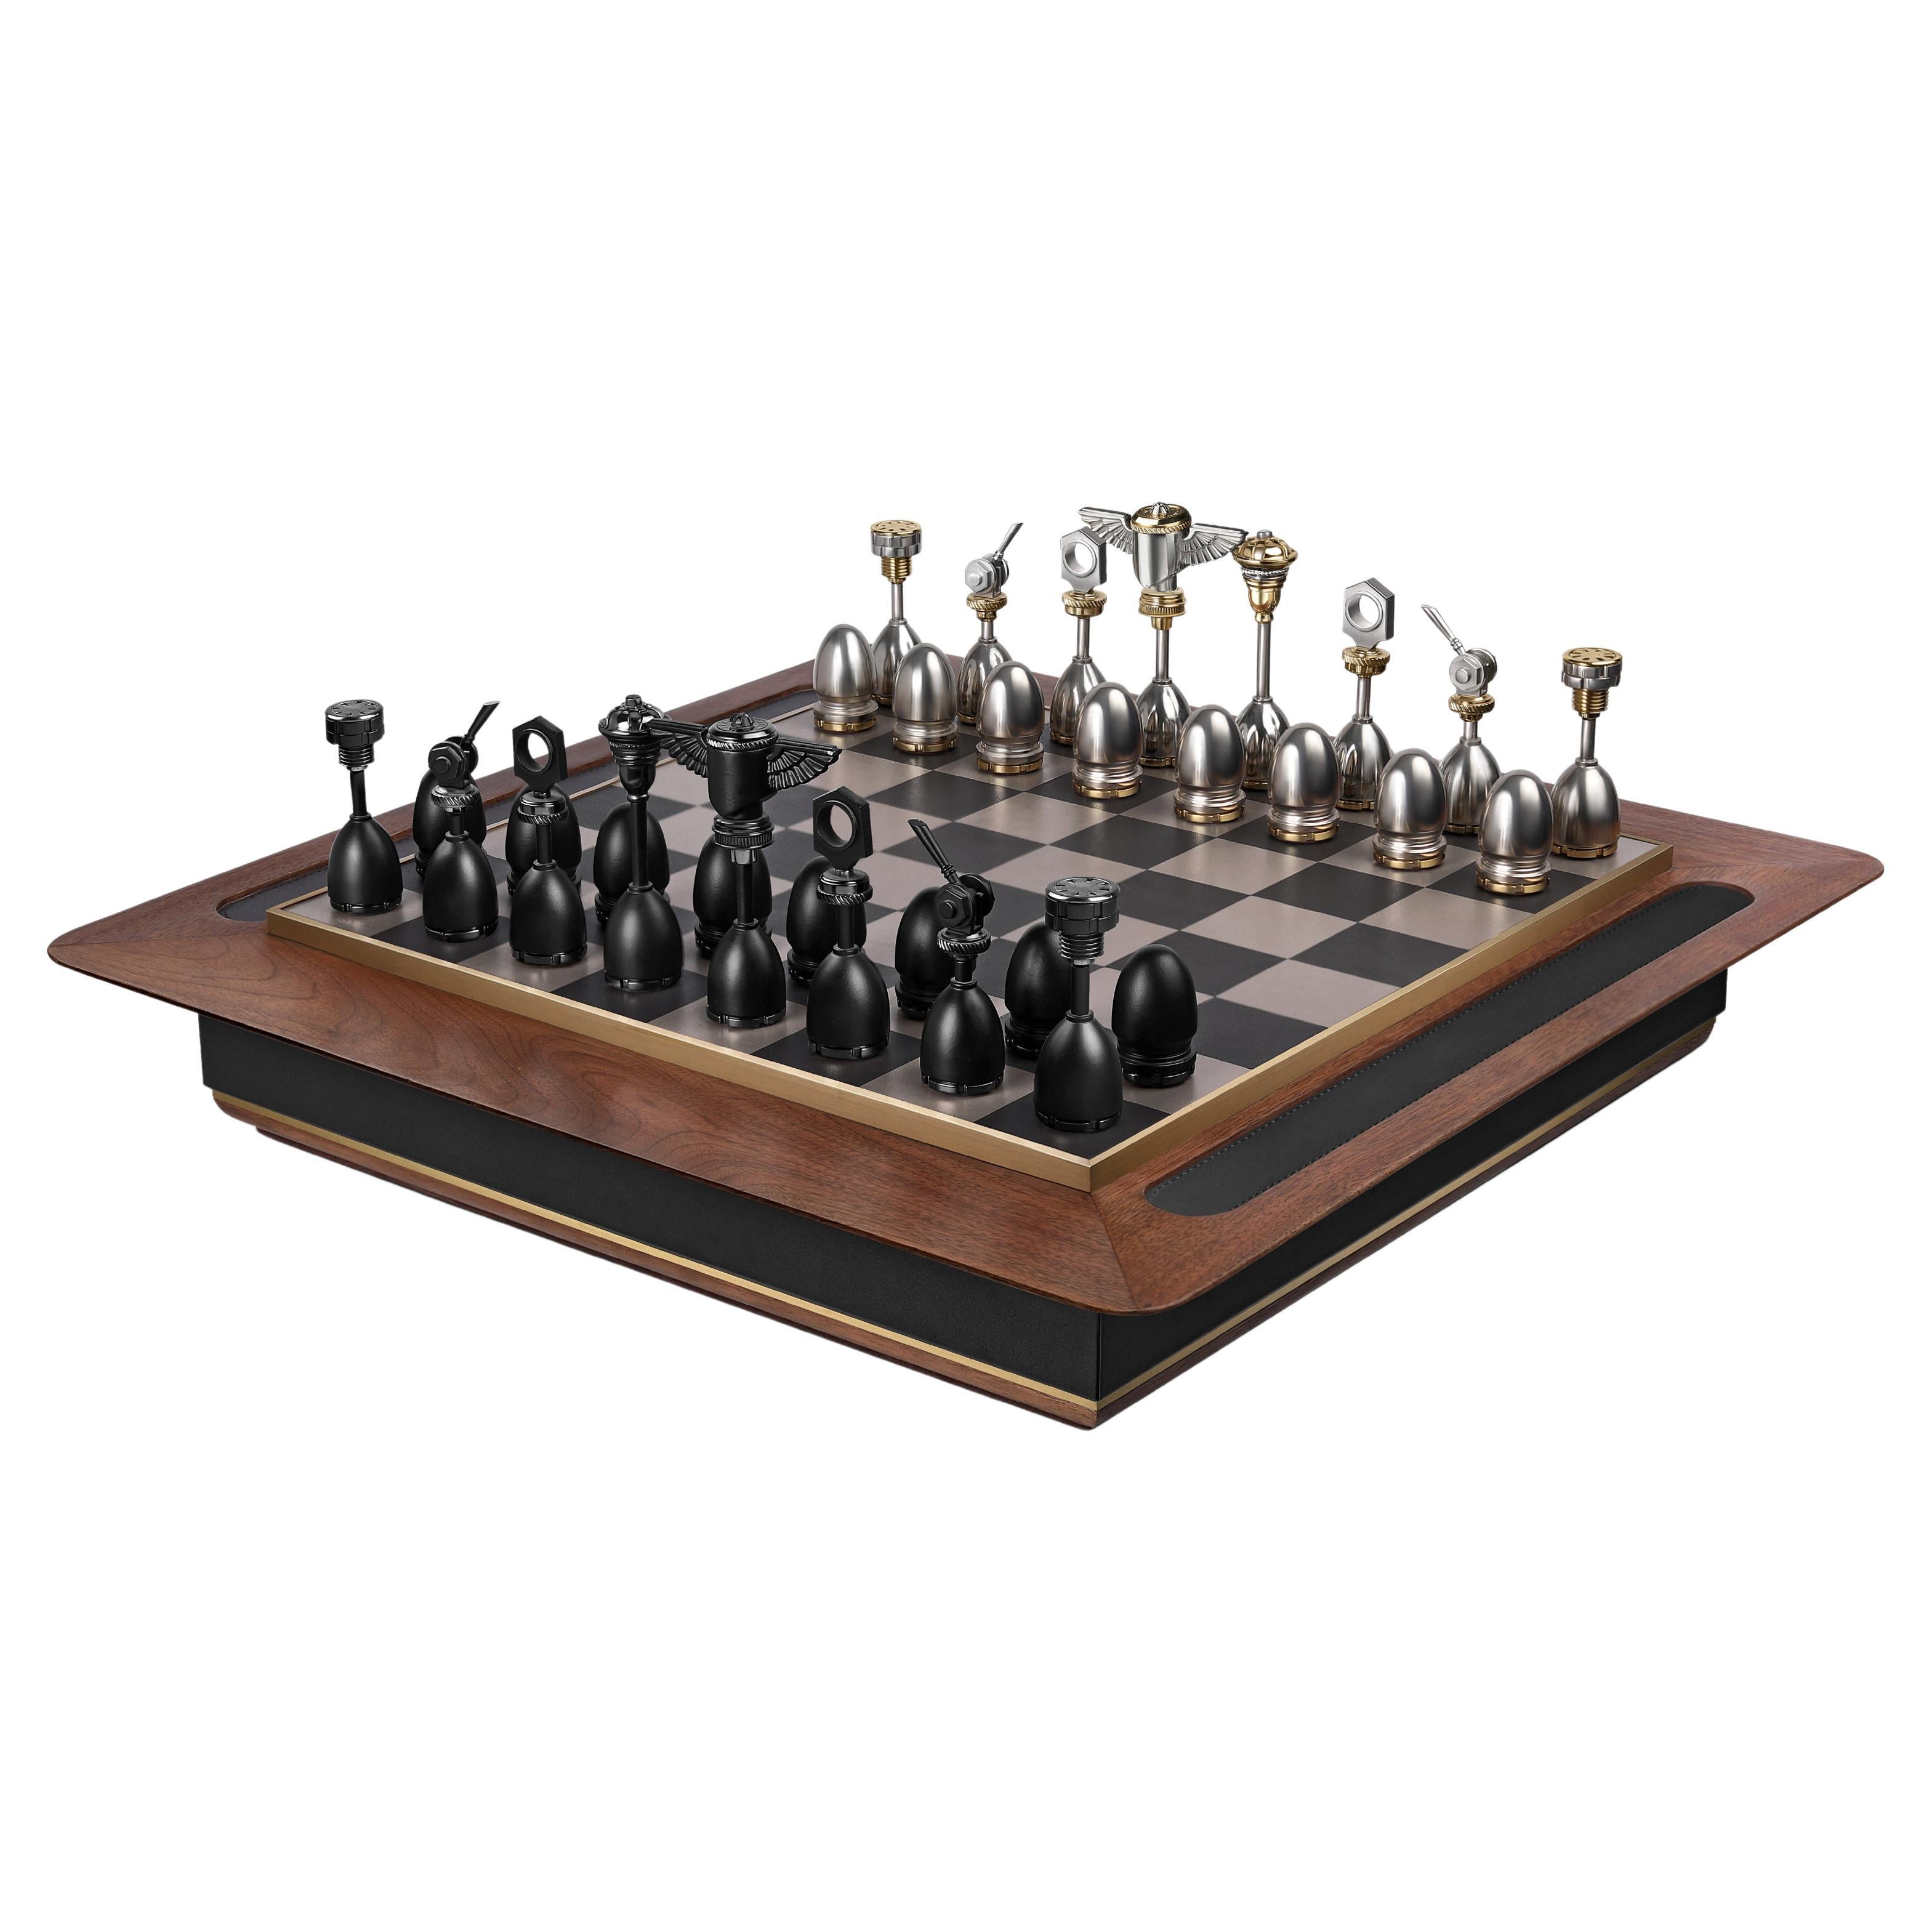 3L Shatranj Chess Set by Madheke For Sale